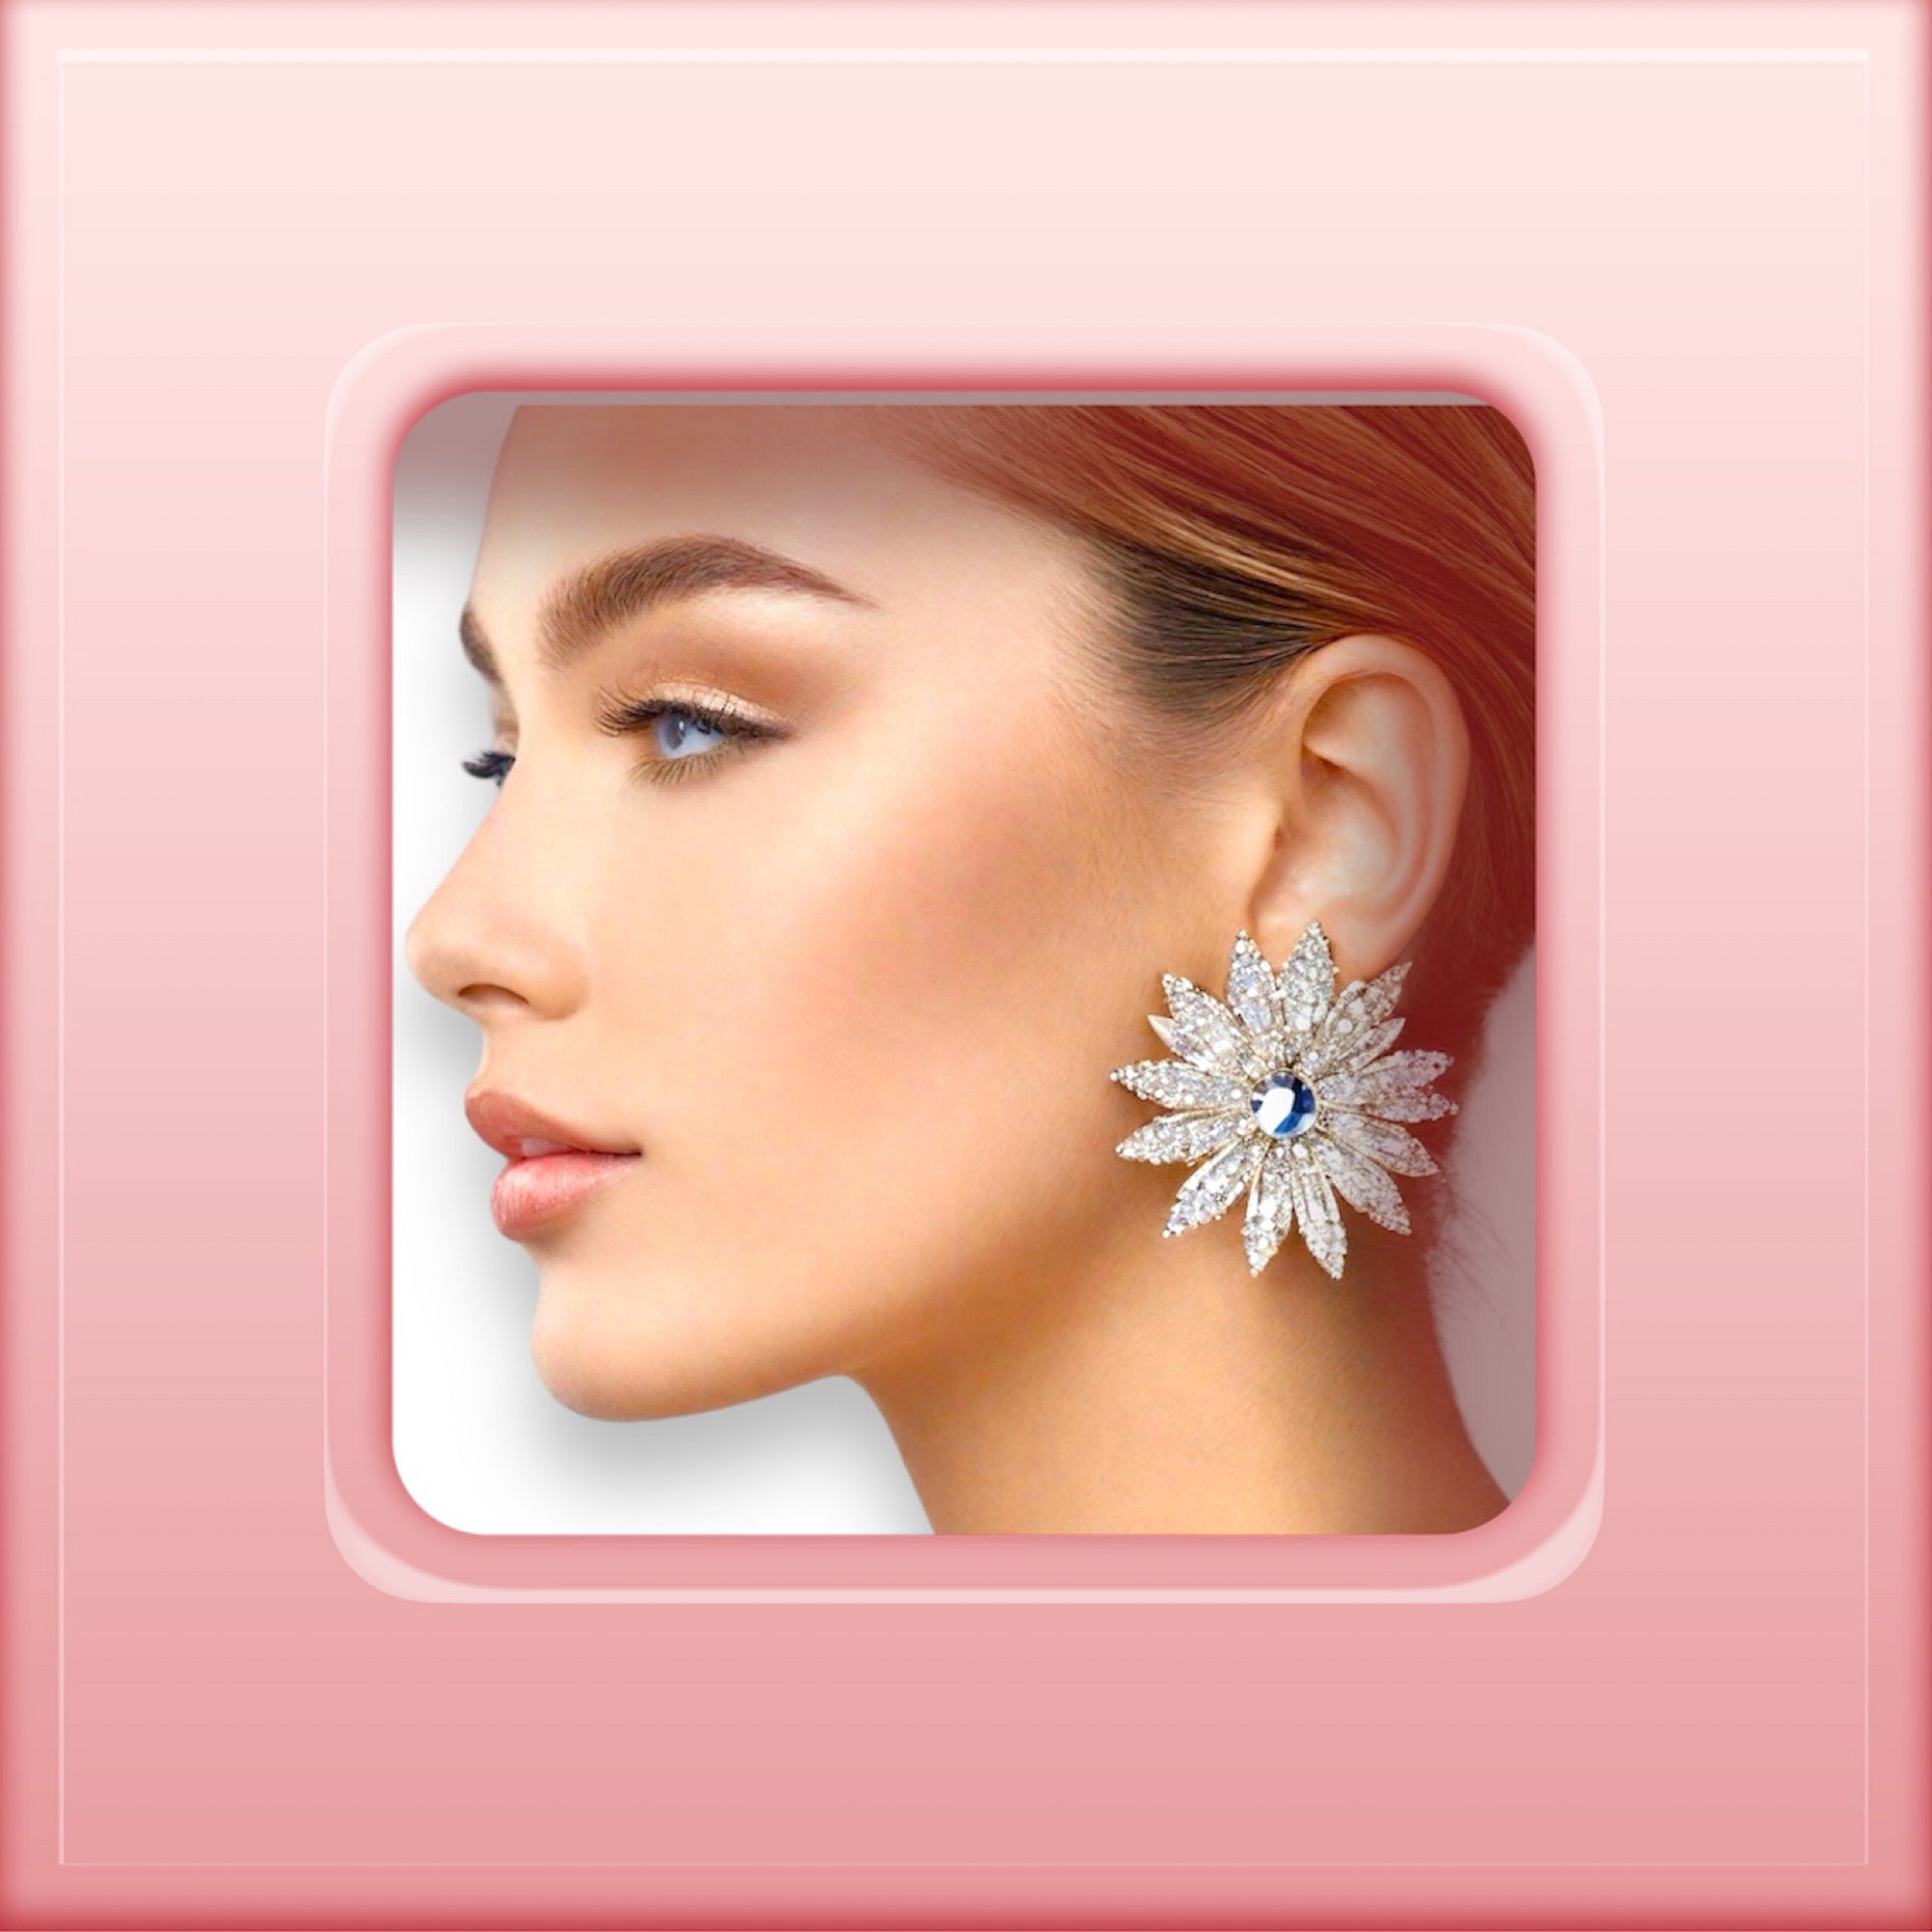 Side profile of a women wearing silver star shaped stud earrings in a pink photo frame